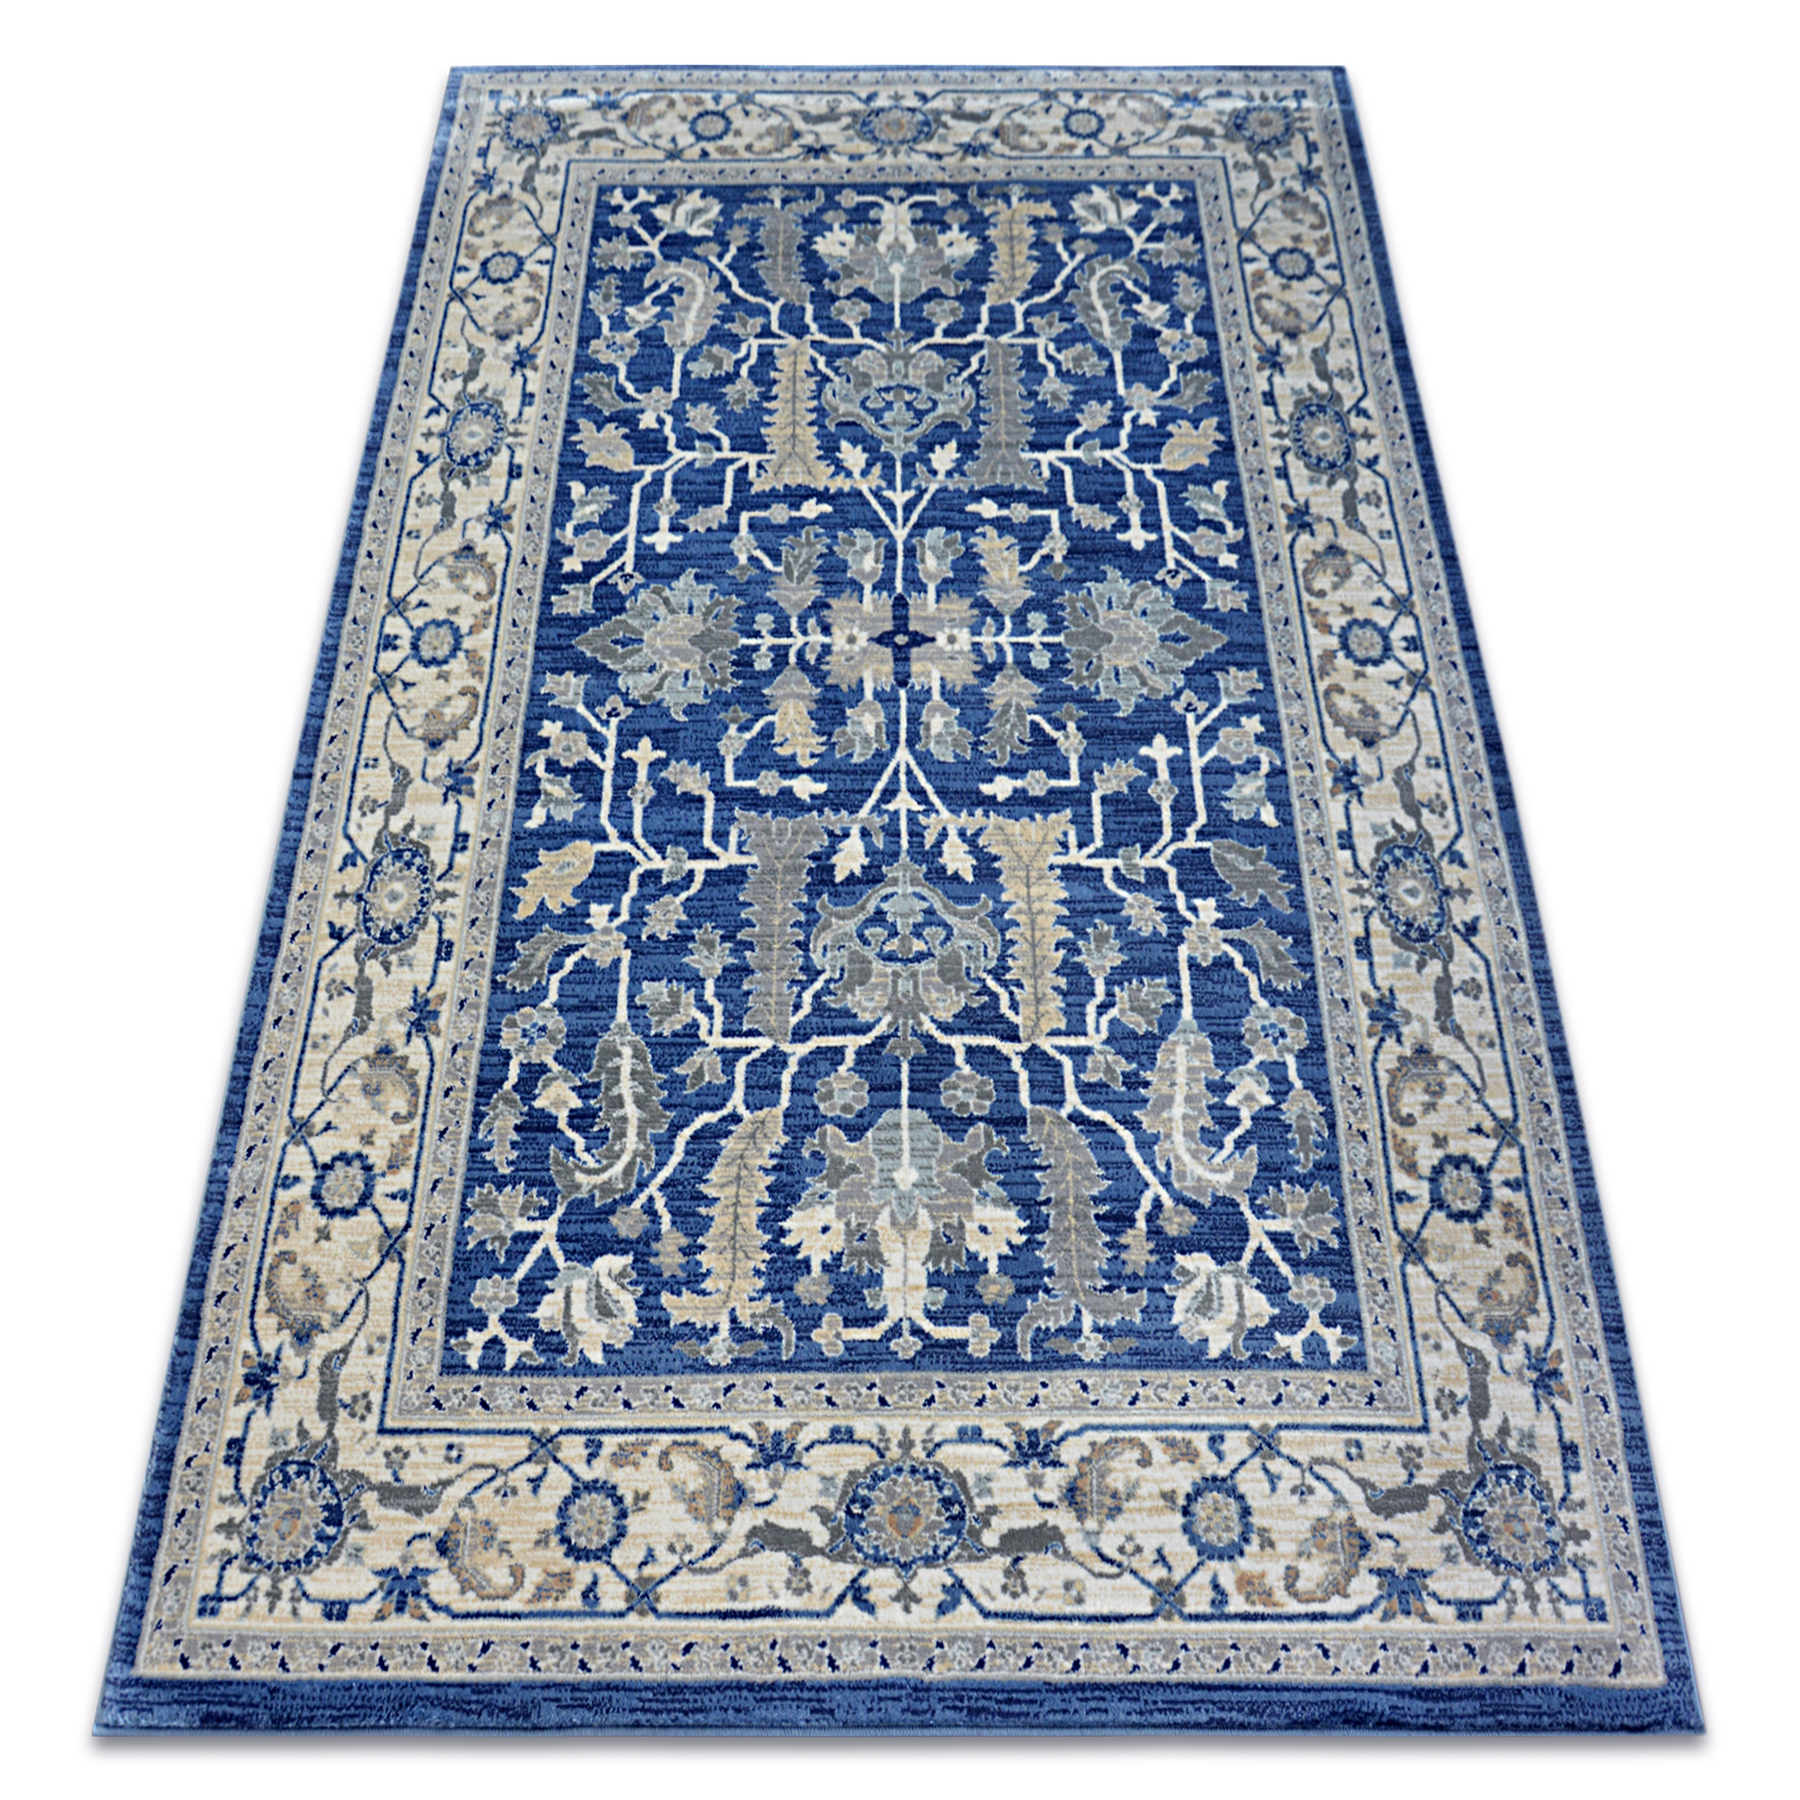 TRADITIONAL Carpets STYLISH RUG WINDSOR Jacquard navy blue Flowers High Quality 